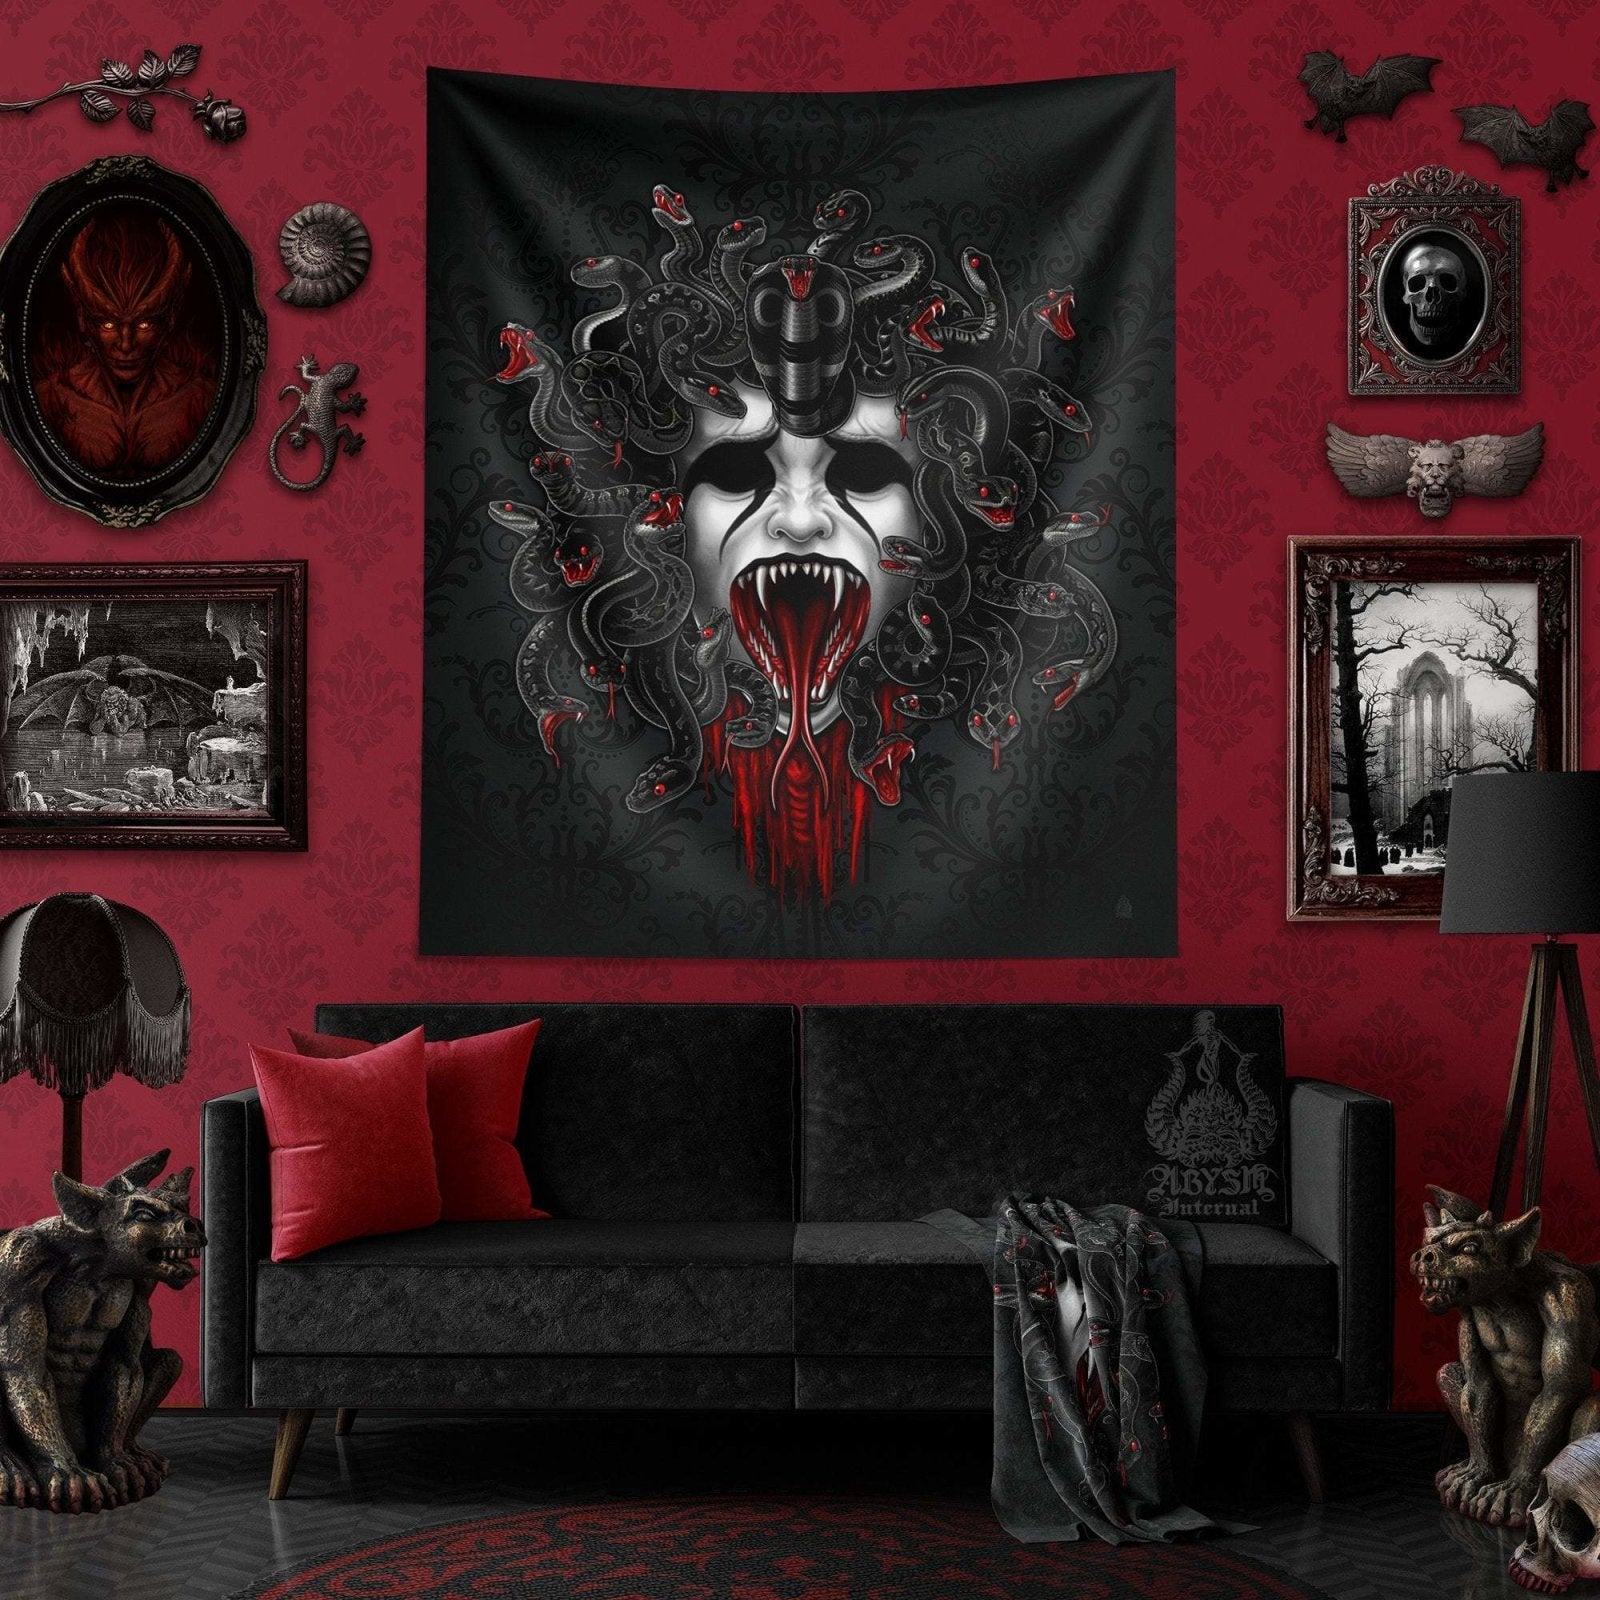 Gothic Tapestry, Medusa & Skull Wall Hanging, Nu Goth Home Decor, Art Print - Black Snakes - Abysm Internal